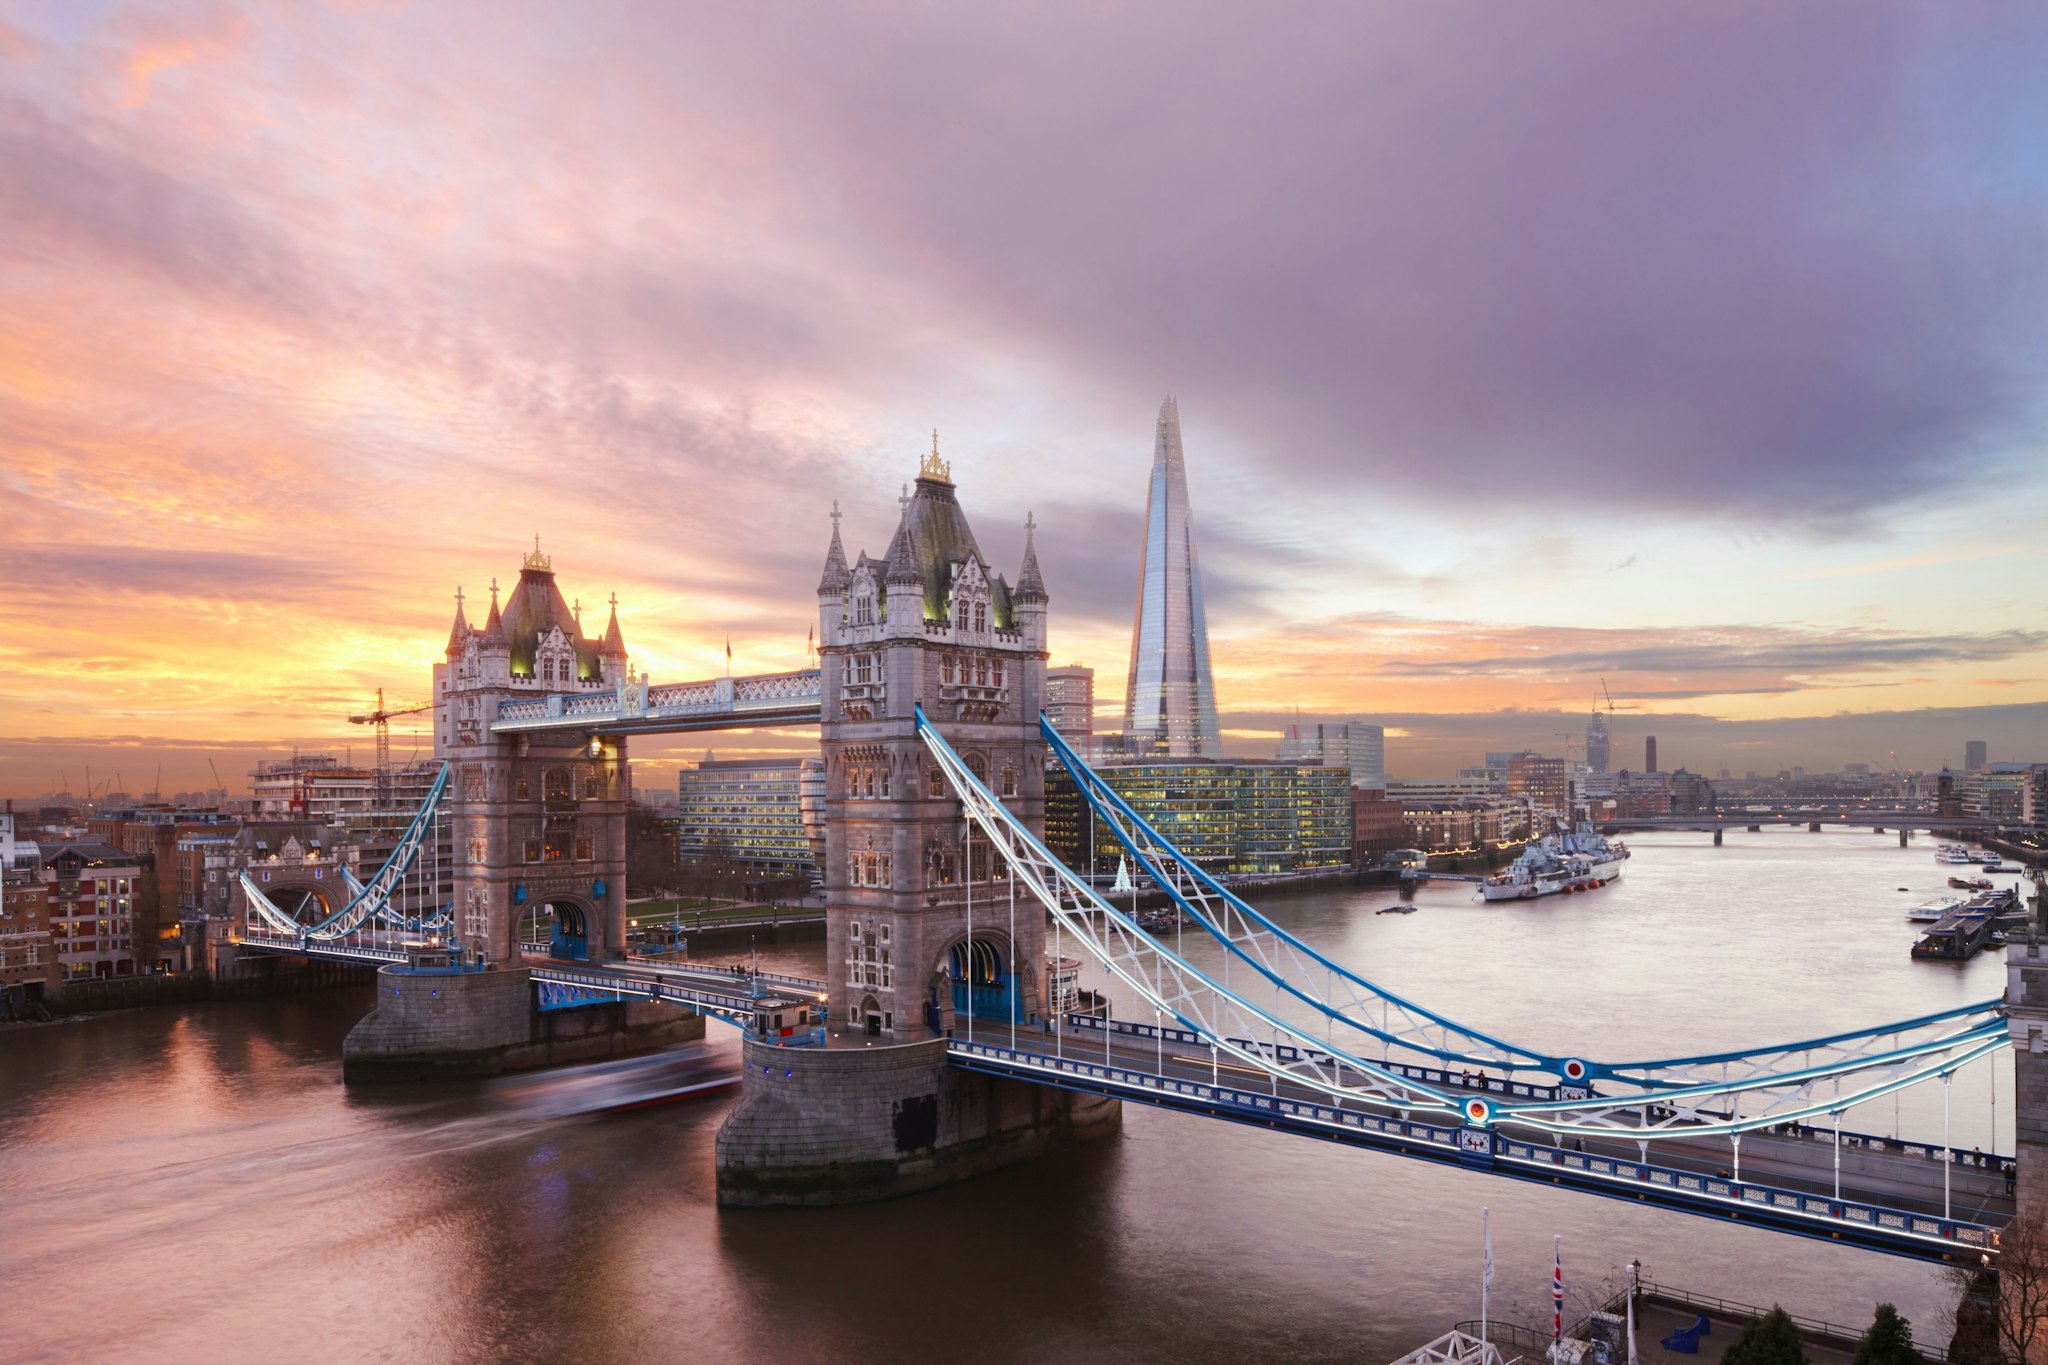 The iconic Tower Bridge in London, UK